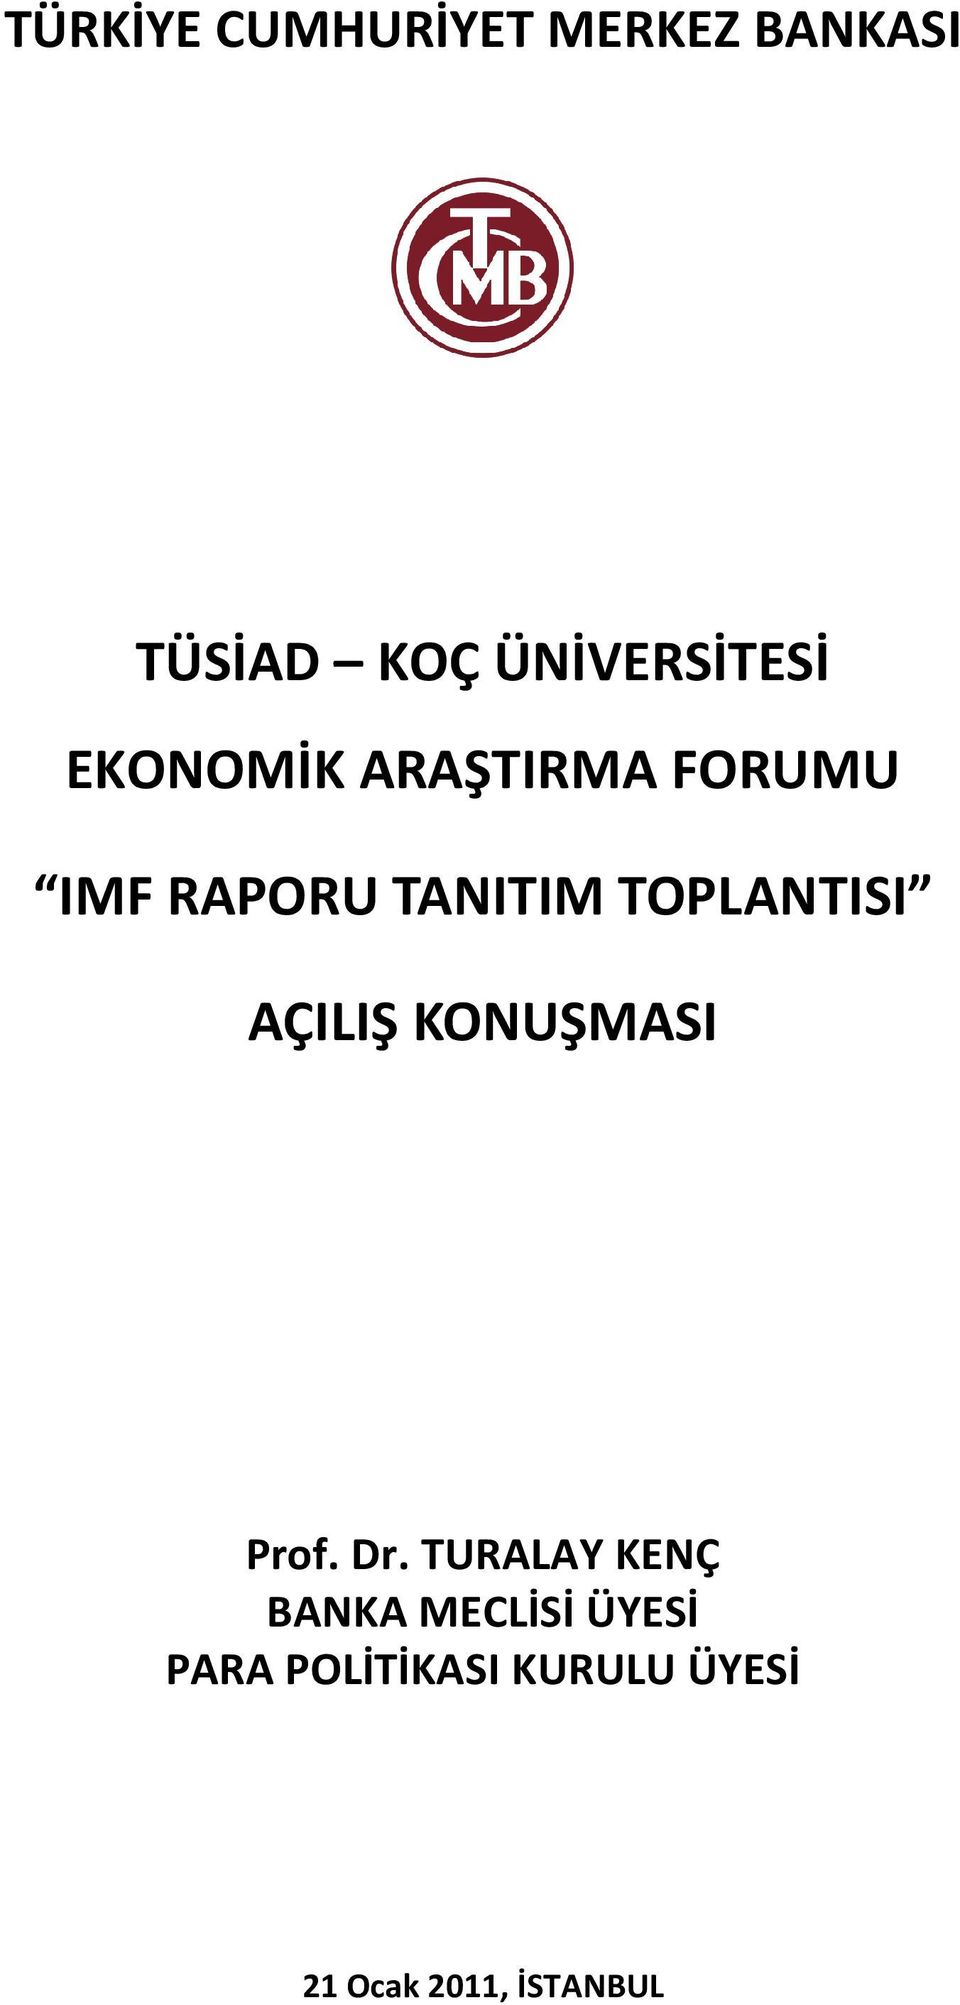 TANITIM TOPLANTISI AÇILIŞ KONUŞMASI Prof. Dr.